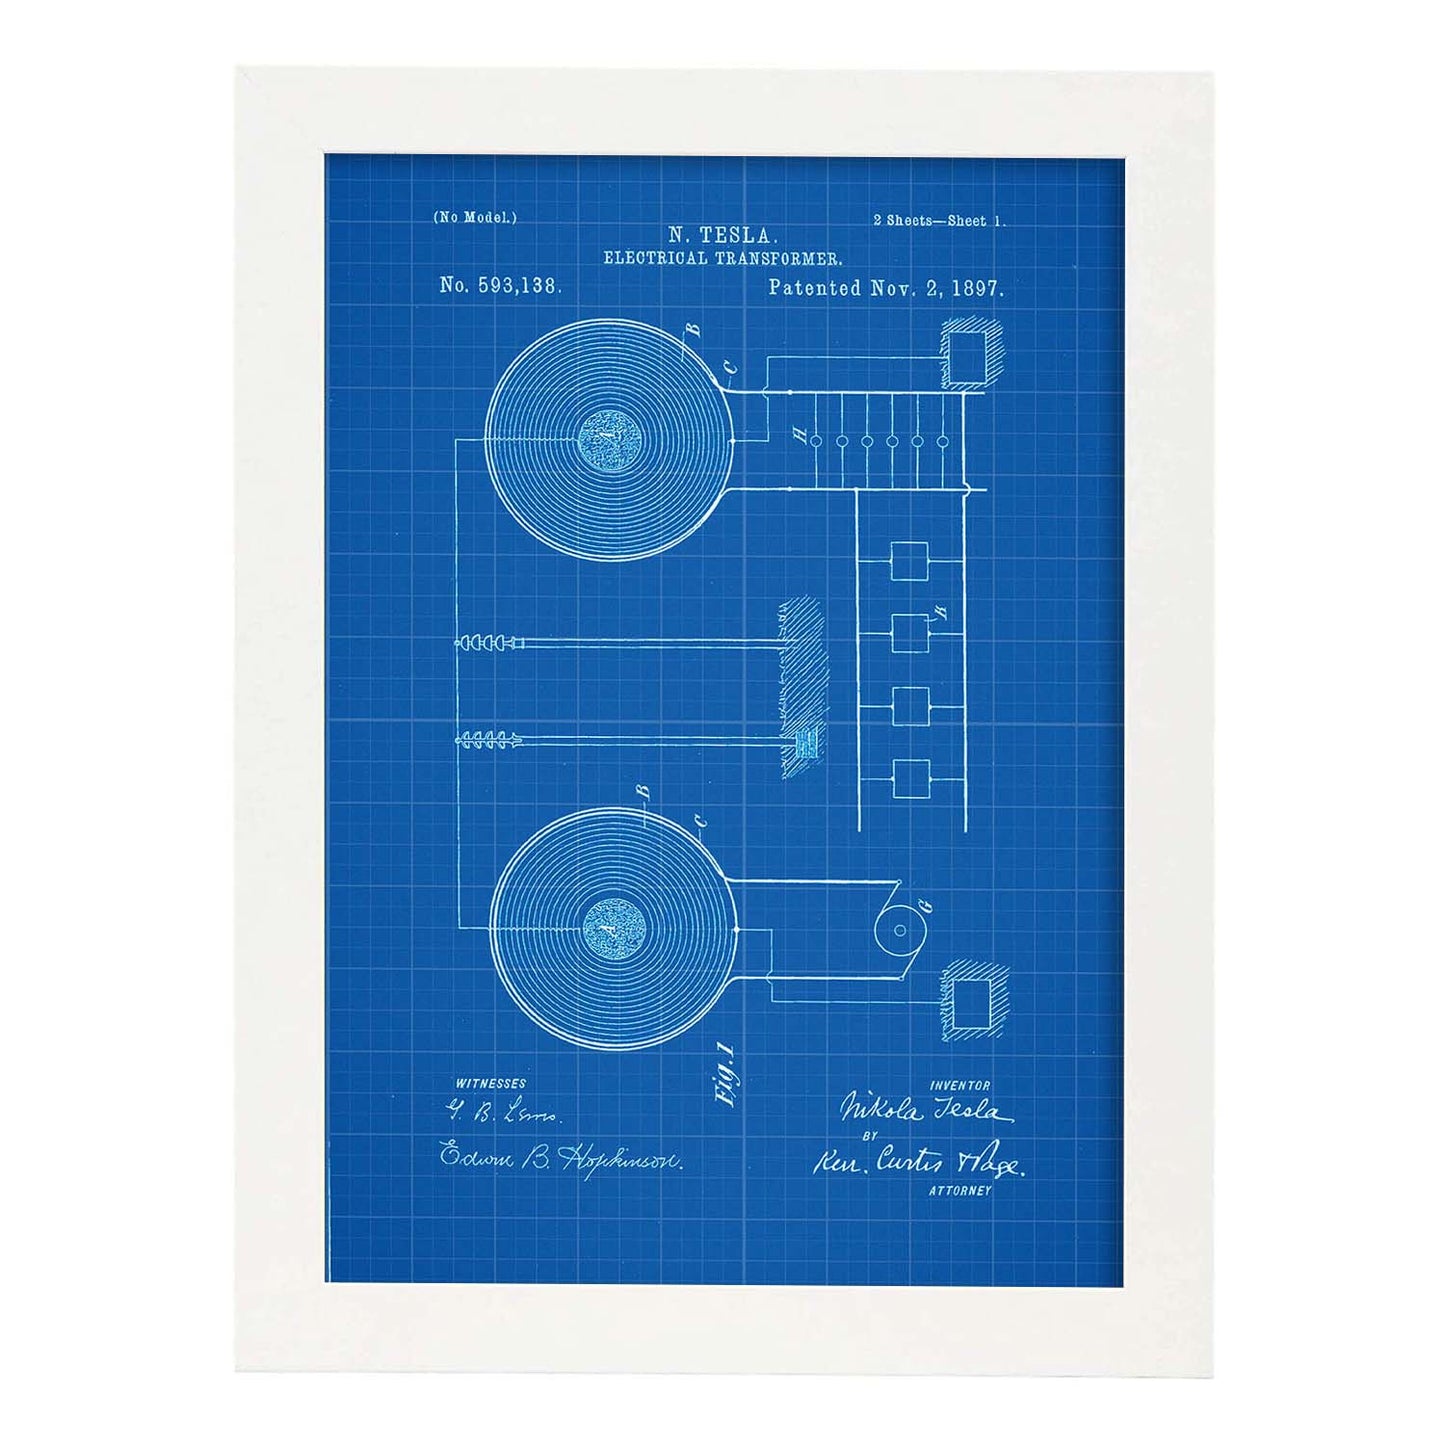 Poster con patente de Transformador electrico. Lámina con diseño de patente antigua-Artwork-Nacnic-A4-Marco Blanco-Nacnic Estudio SL